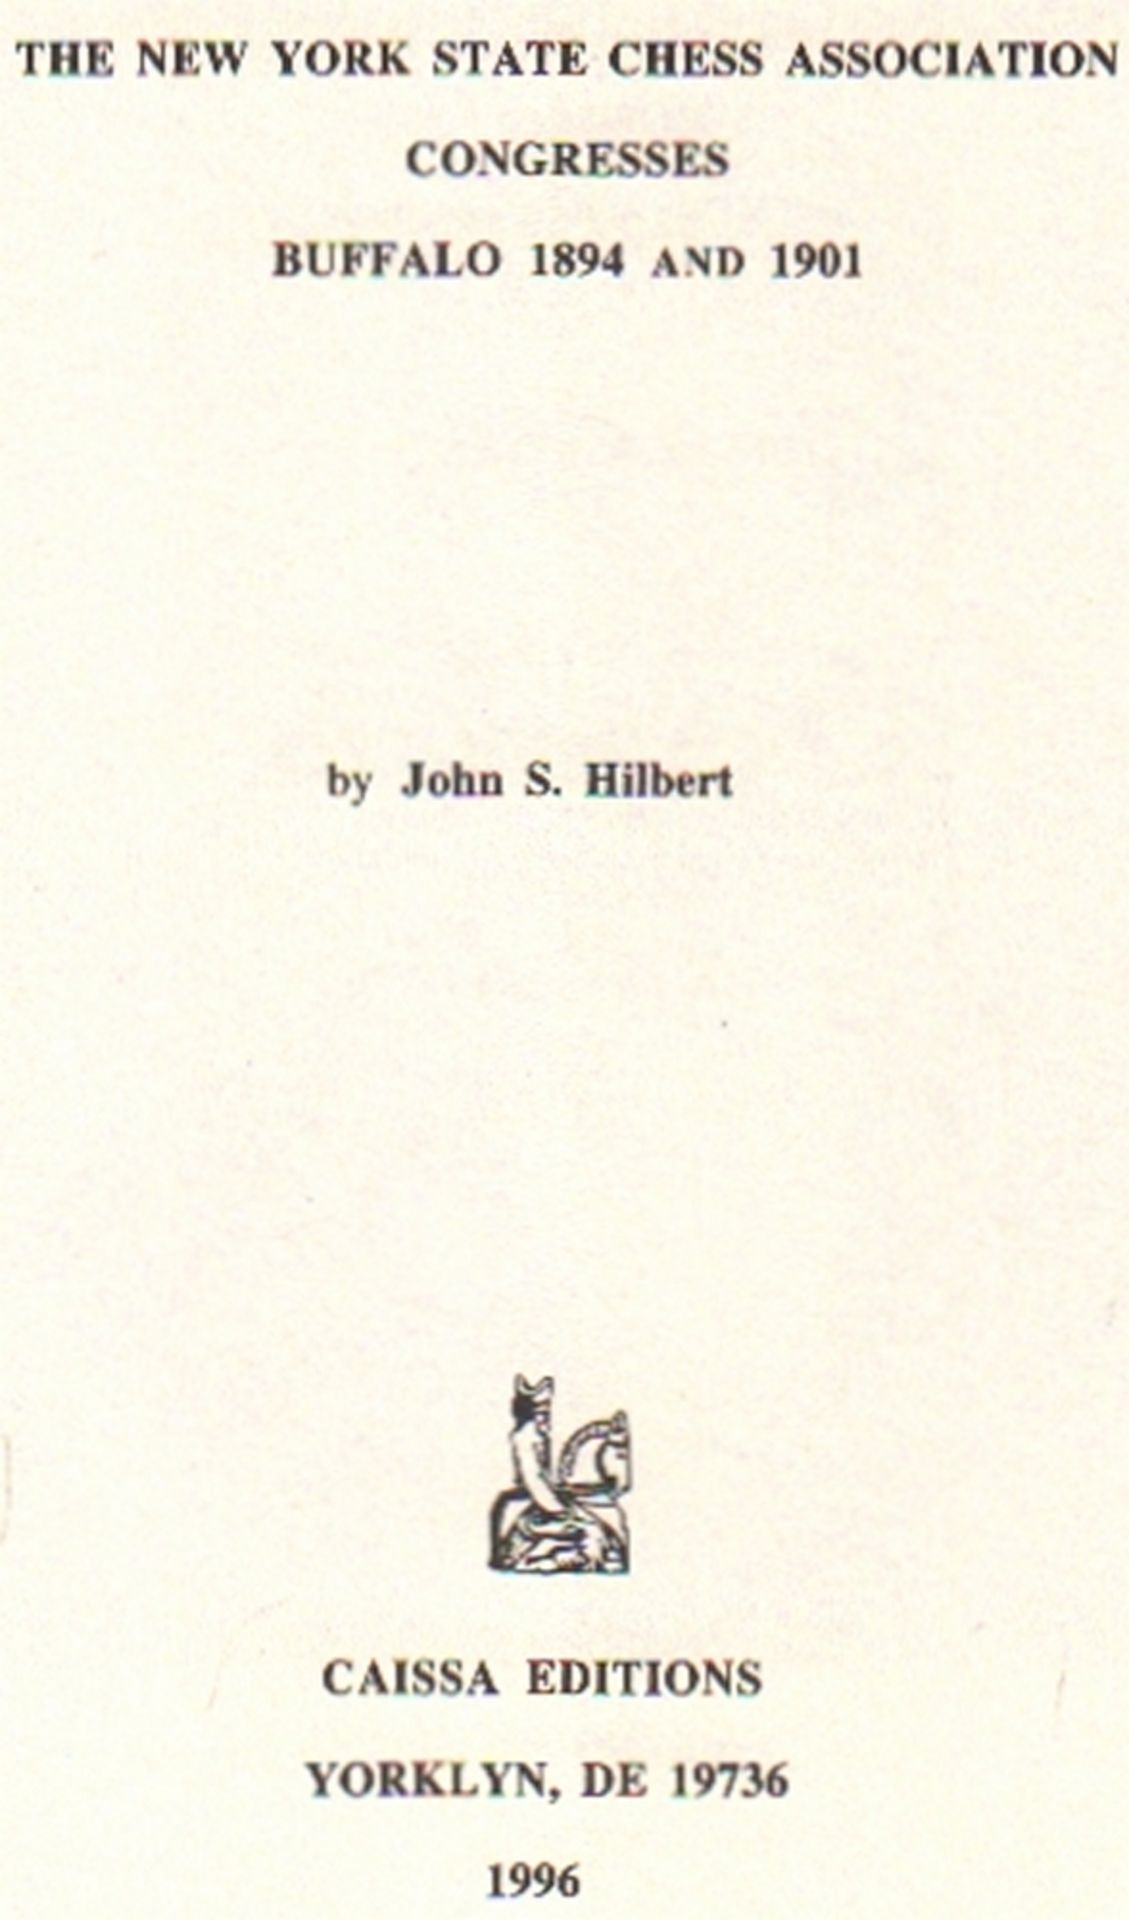 Buffalo 1894 und 1901. Hilbert, John S. The New York State Chess Association congresses Buffalo 1894